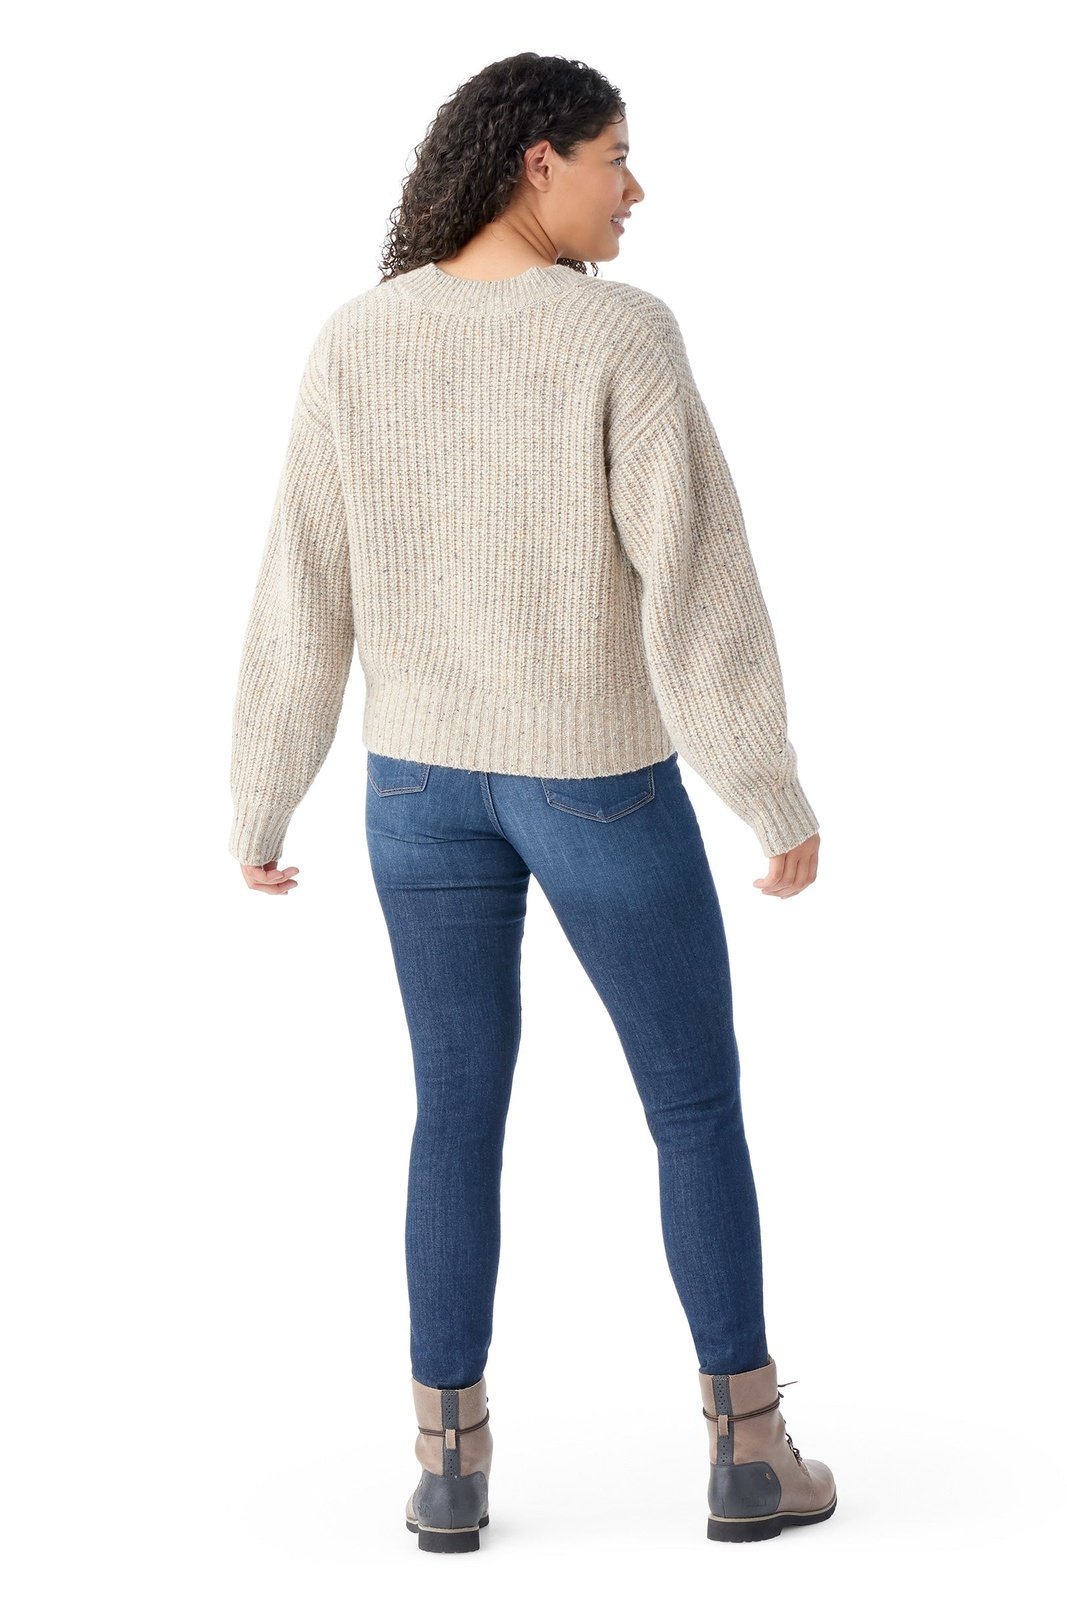 SMARTWOOL Cozy Lodge Cardigan Sweater *Final Sale*